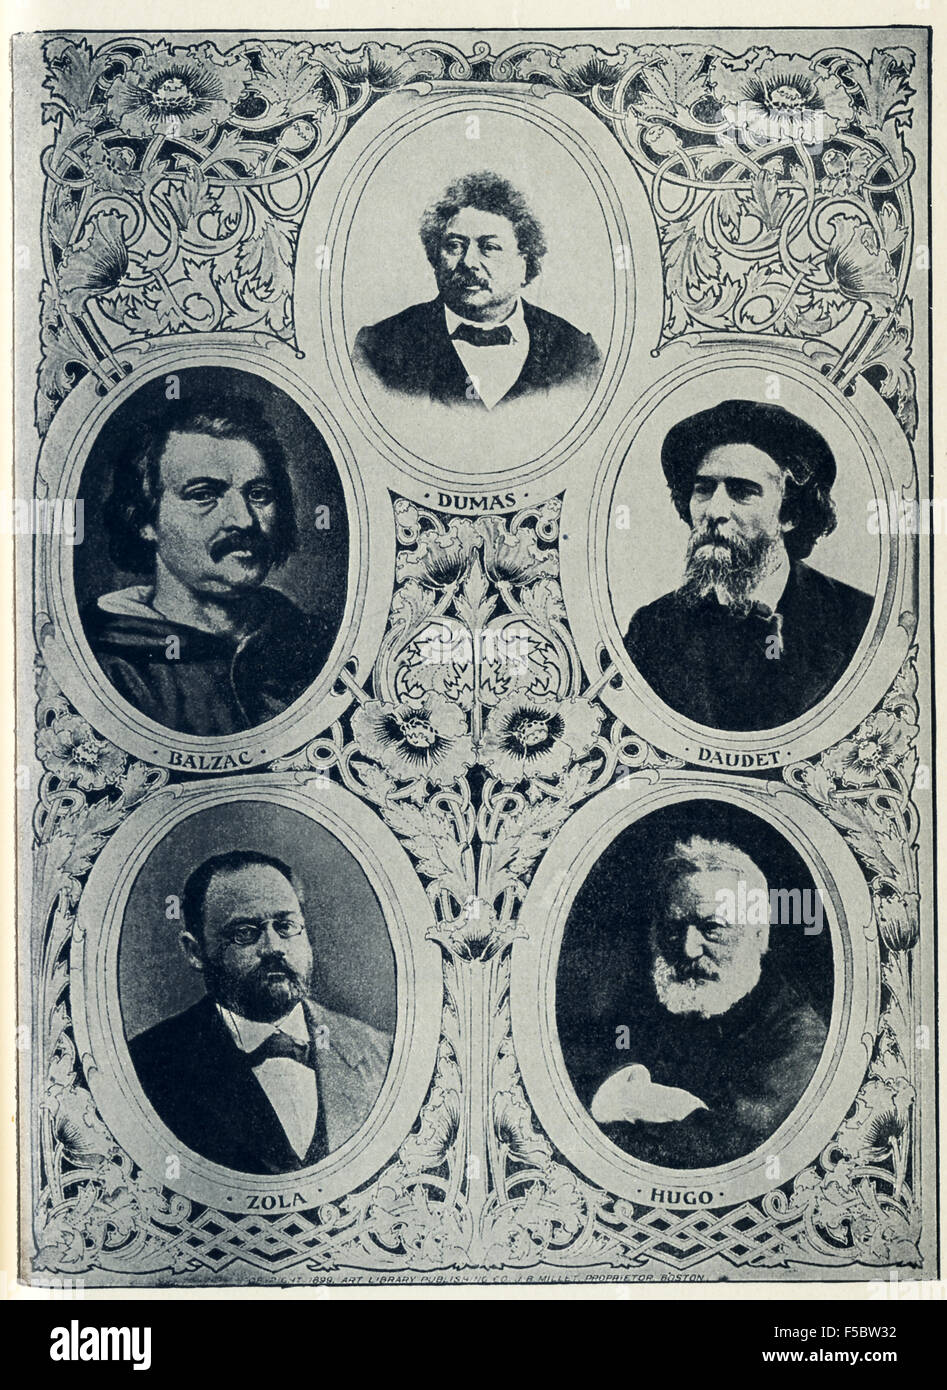 The French authors shown here are: Alexandre Dumas (1802-1870), Honore de Balzac (1799-1850), Alphonse Daudet (1840-1897), Emile Zola (1840-1902), Victor Hugo (1802-1885). Stock Photo